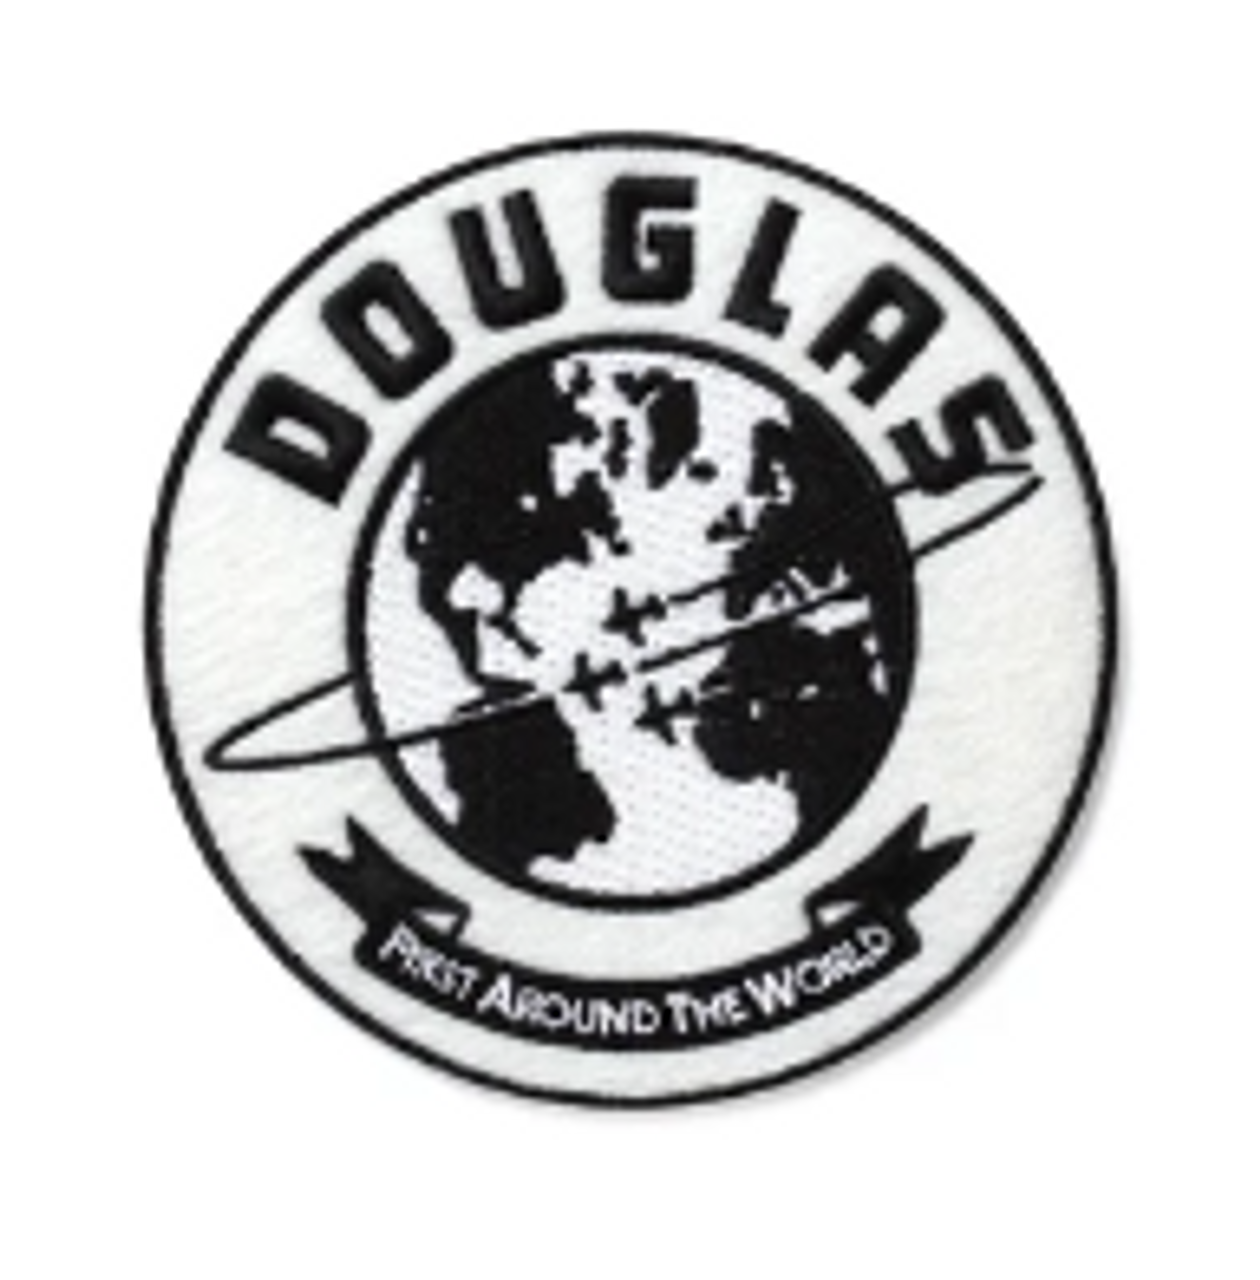 Boeing Heritage Douglas Iron Patch